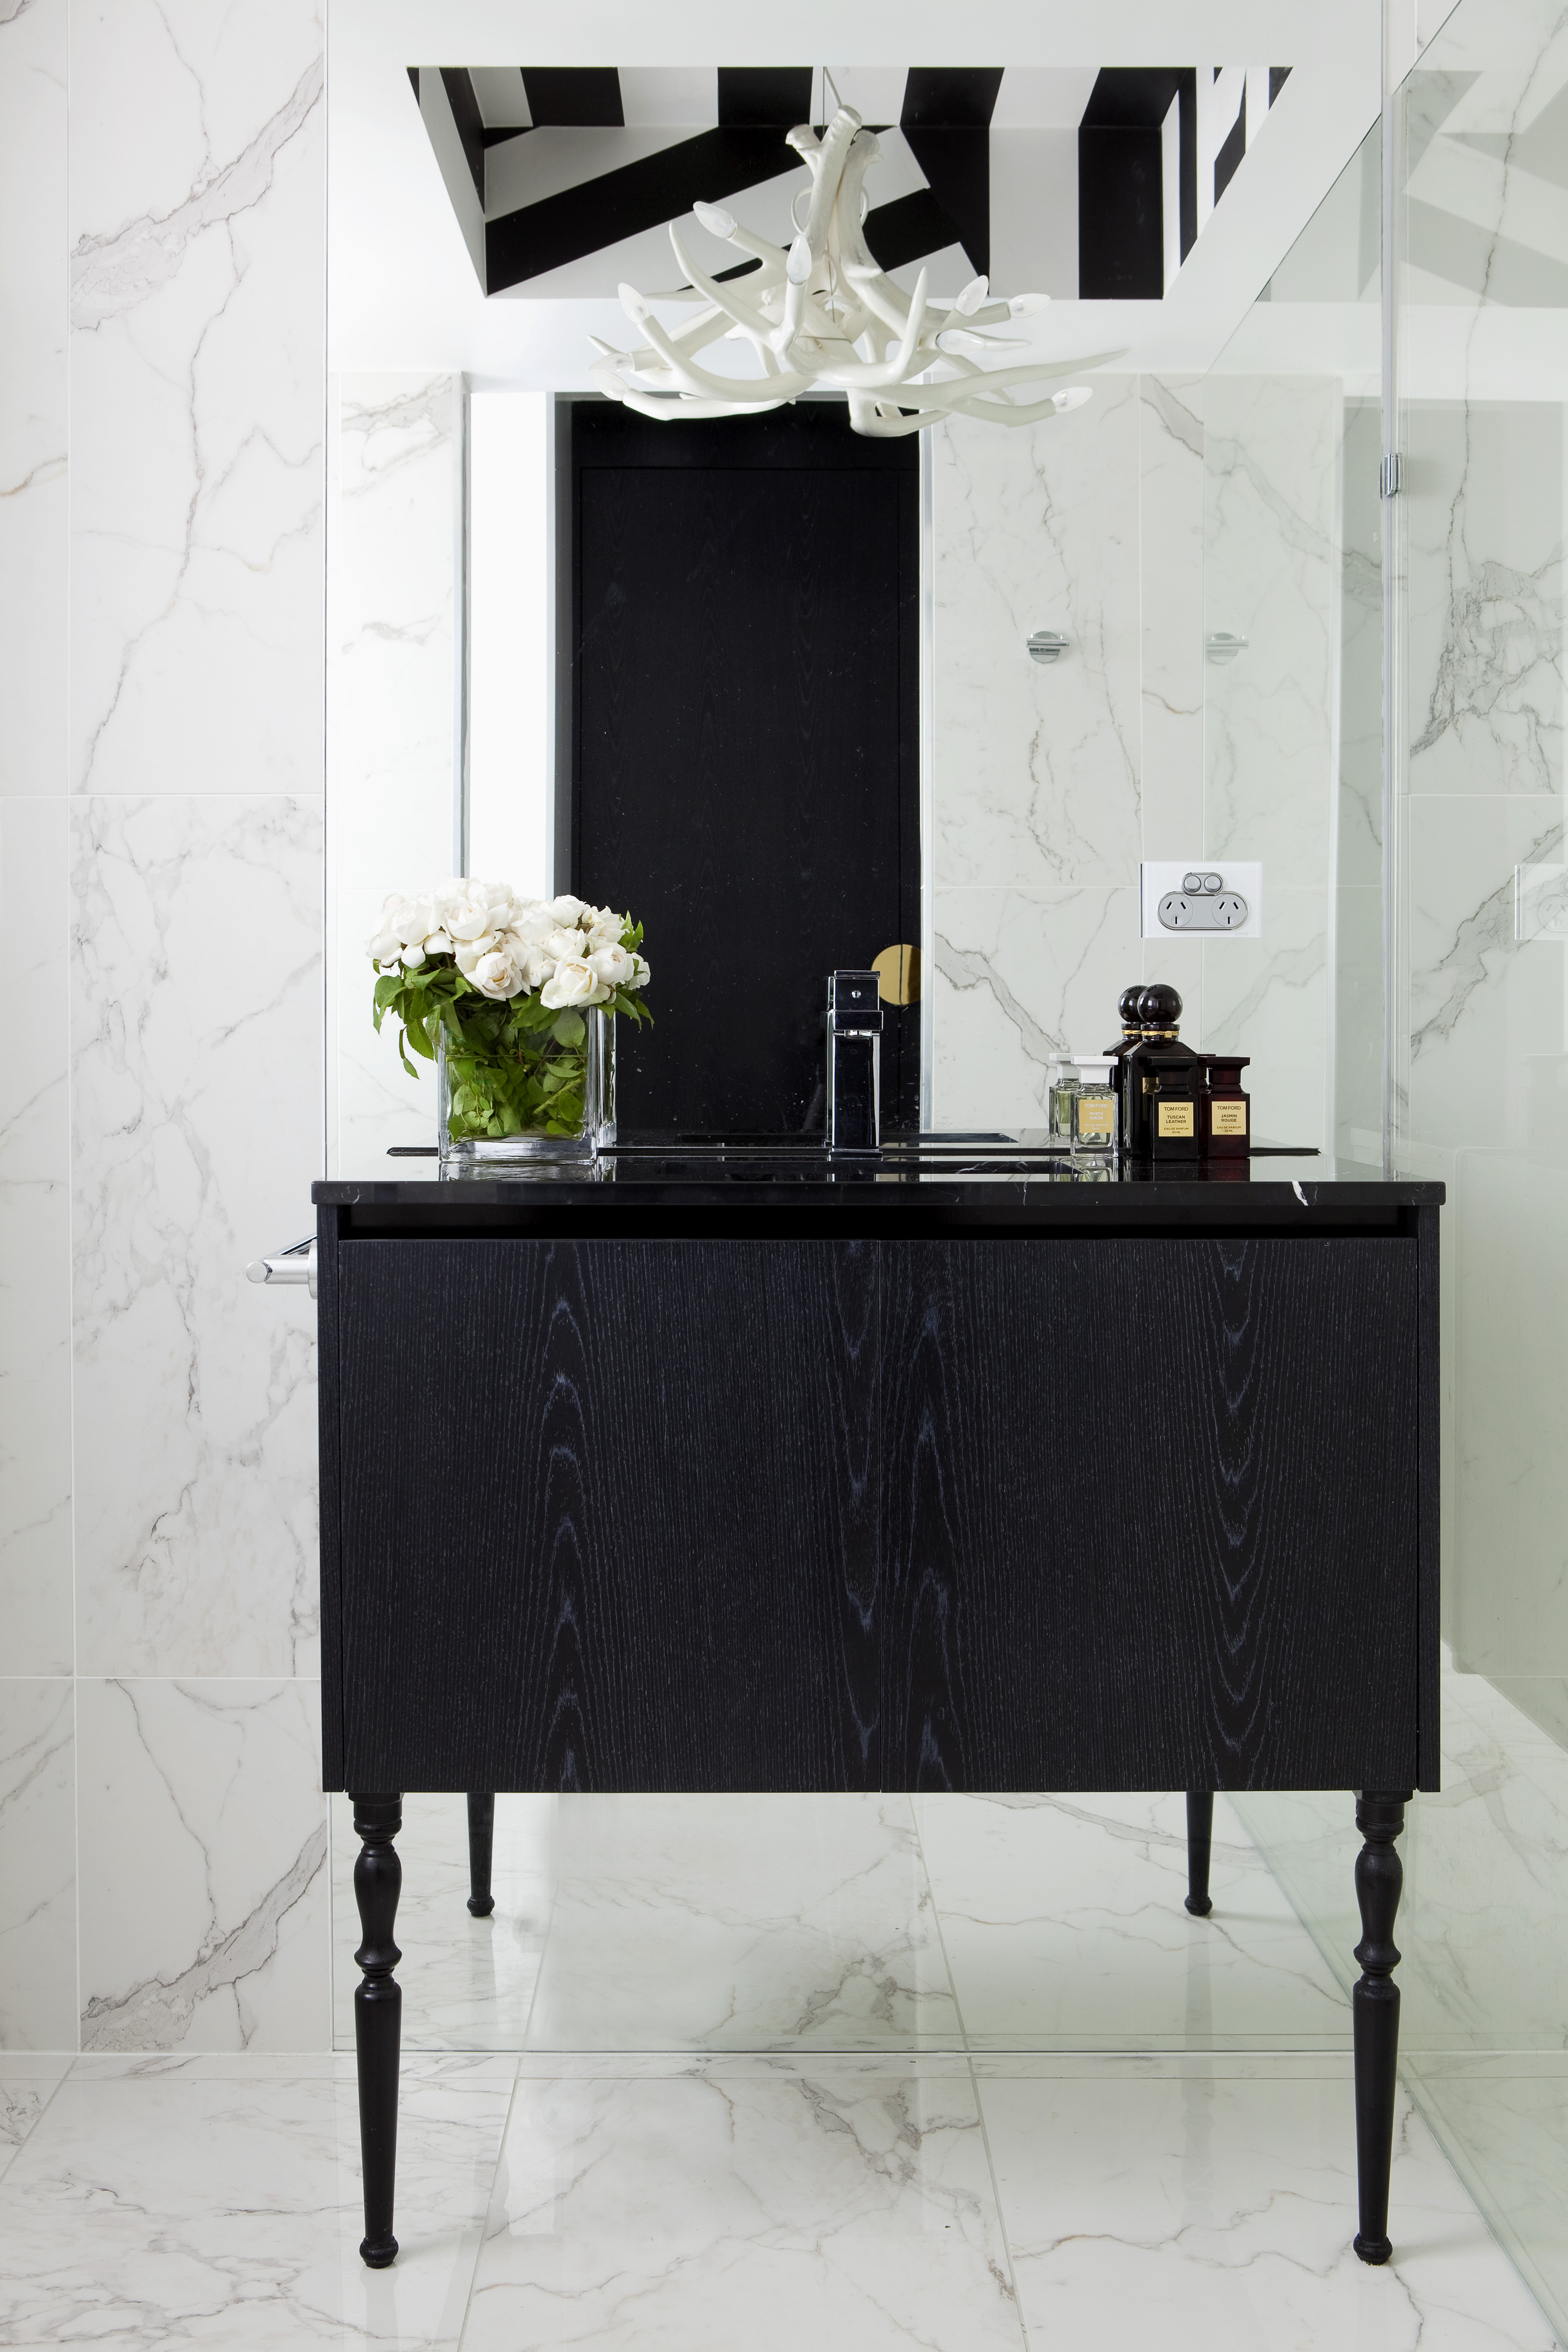 Image 2 - Bathroom design black & white James Dawson Interiors 3 copy